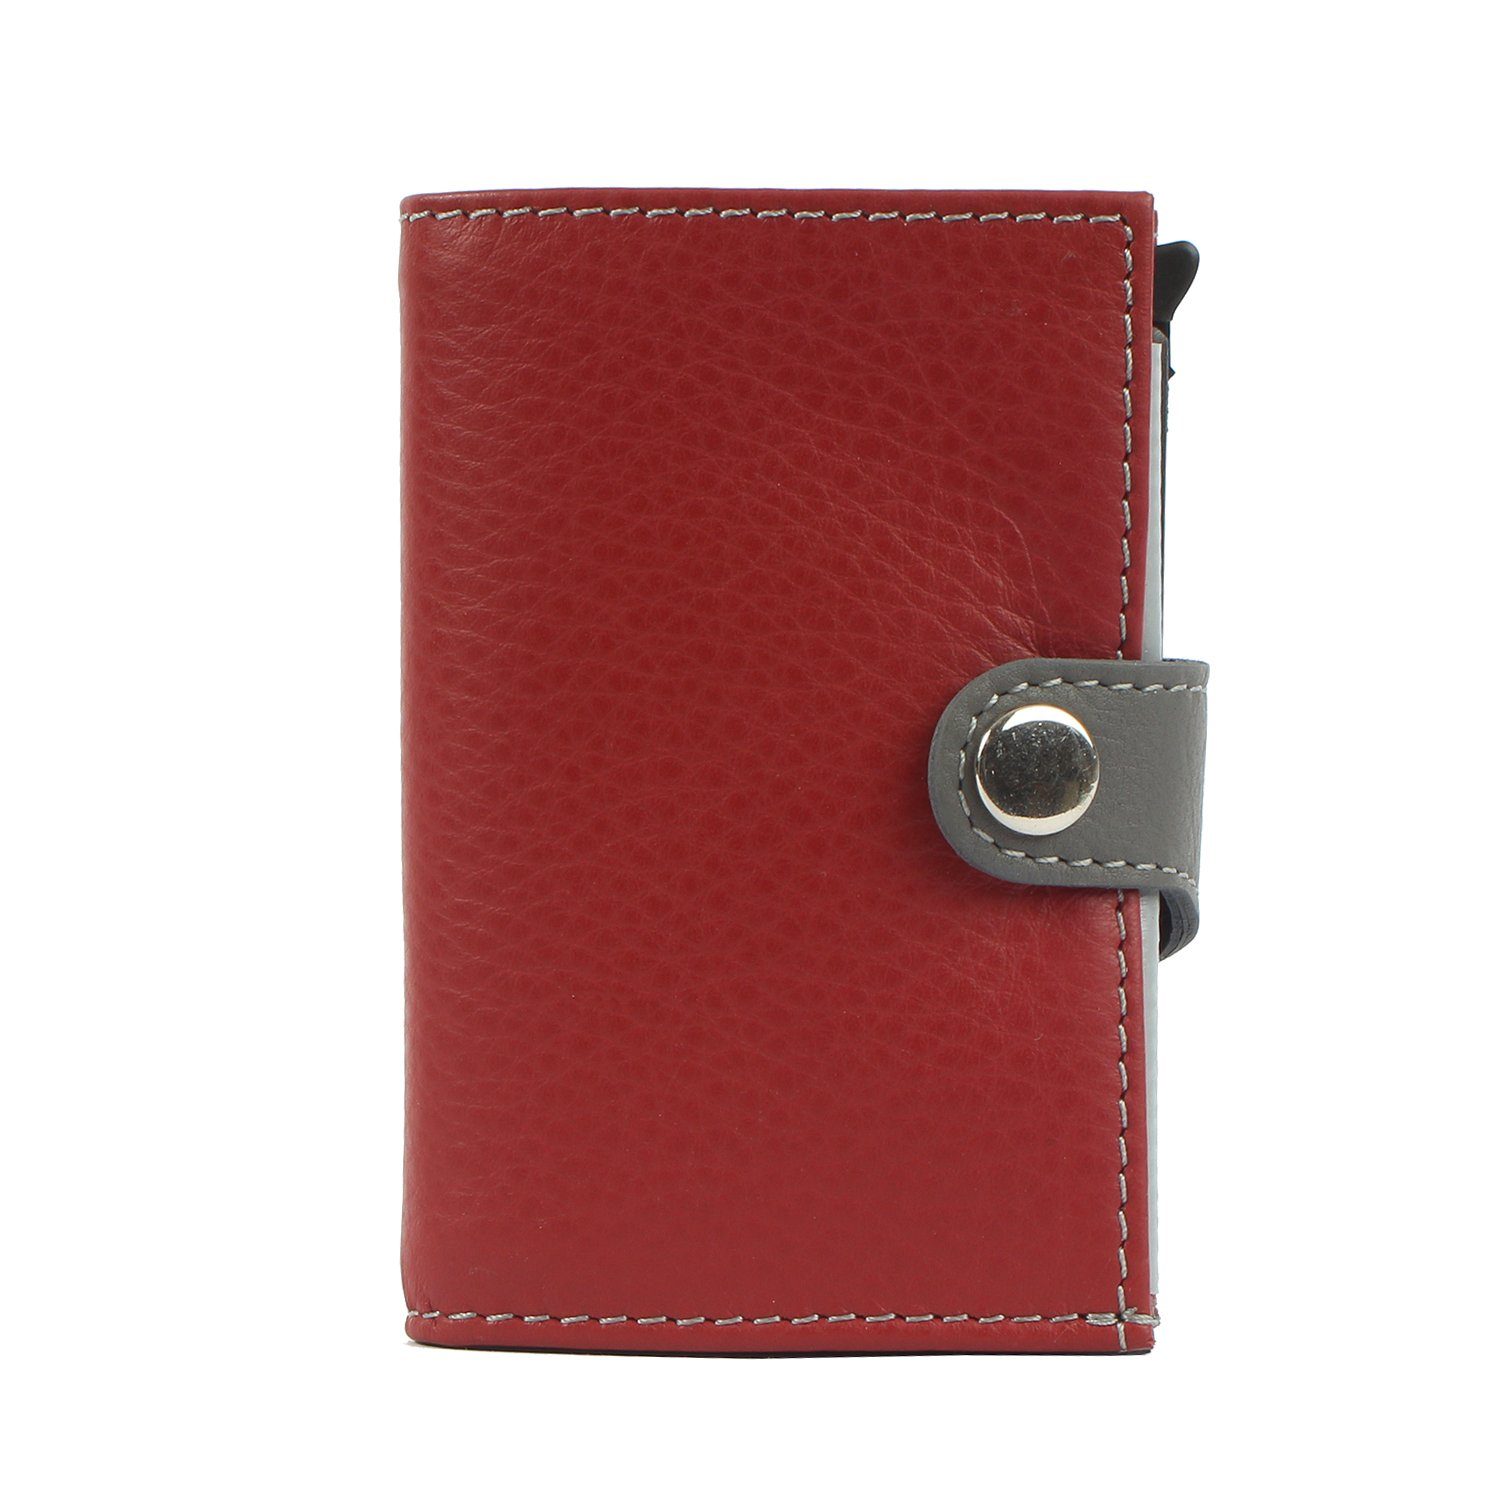 Margelisch Upcycling Mini Geldbörse aus Kreditkartenbörse single noonyu Leder leather, karminrot